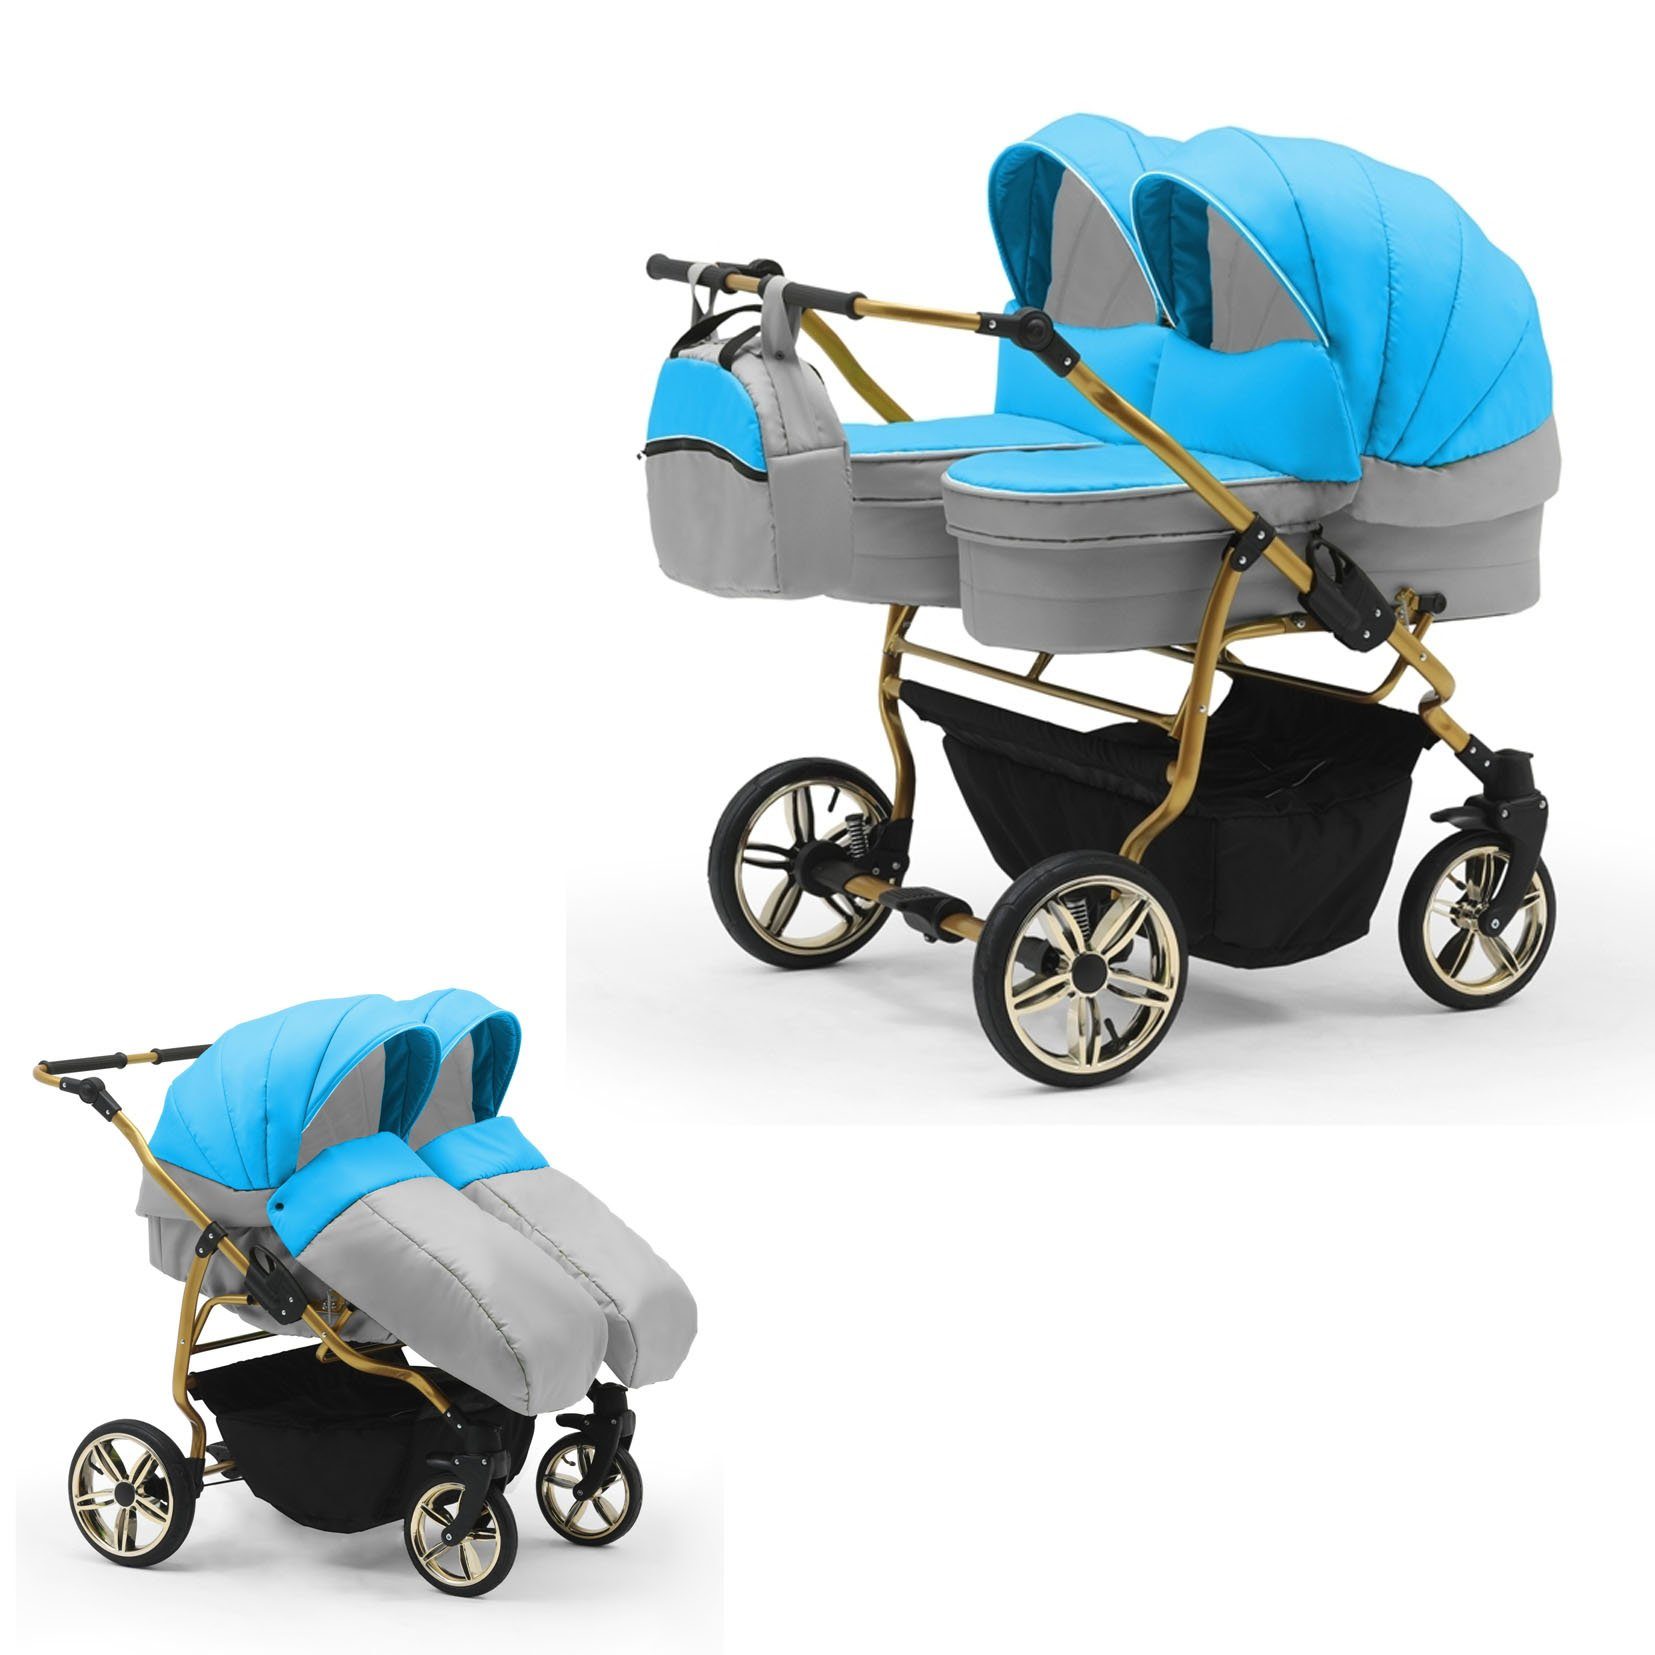 Farben babies-on-wheels 1 - in Zwillingswagen Türkis-Grau - Duet 33 2 Zwillingskinderwagen Teile in 10 Lux